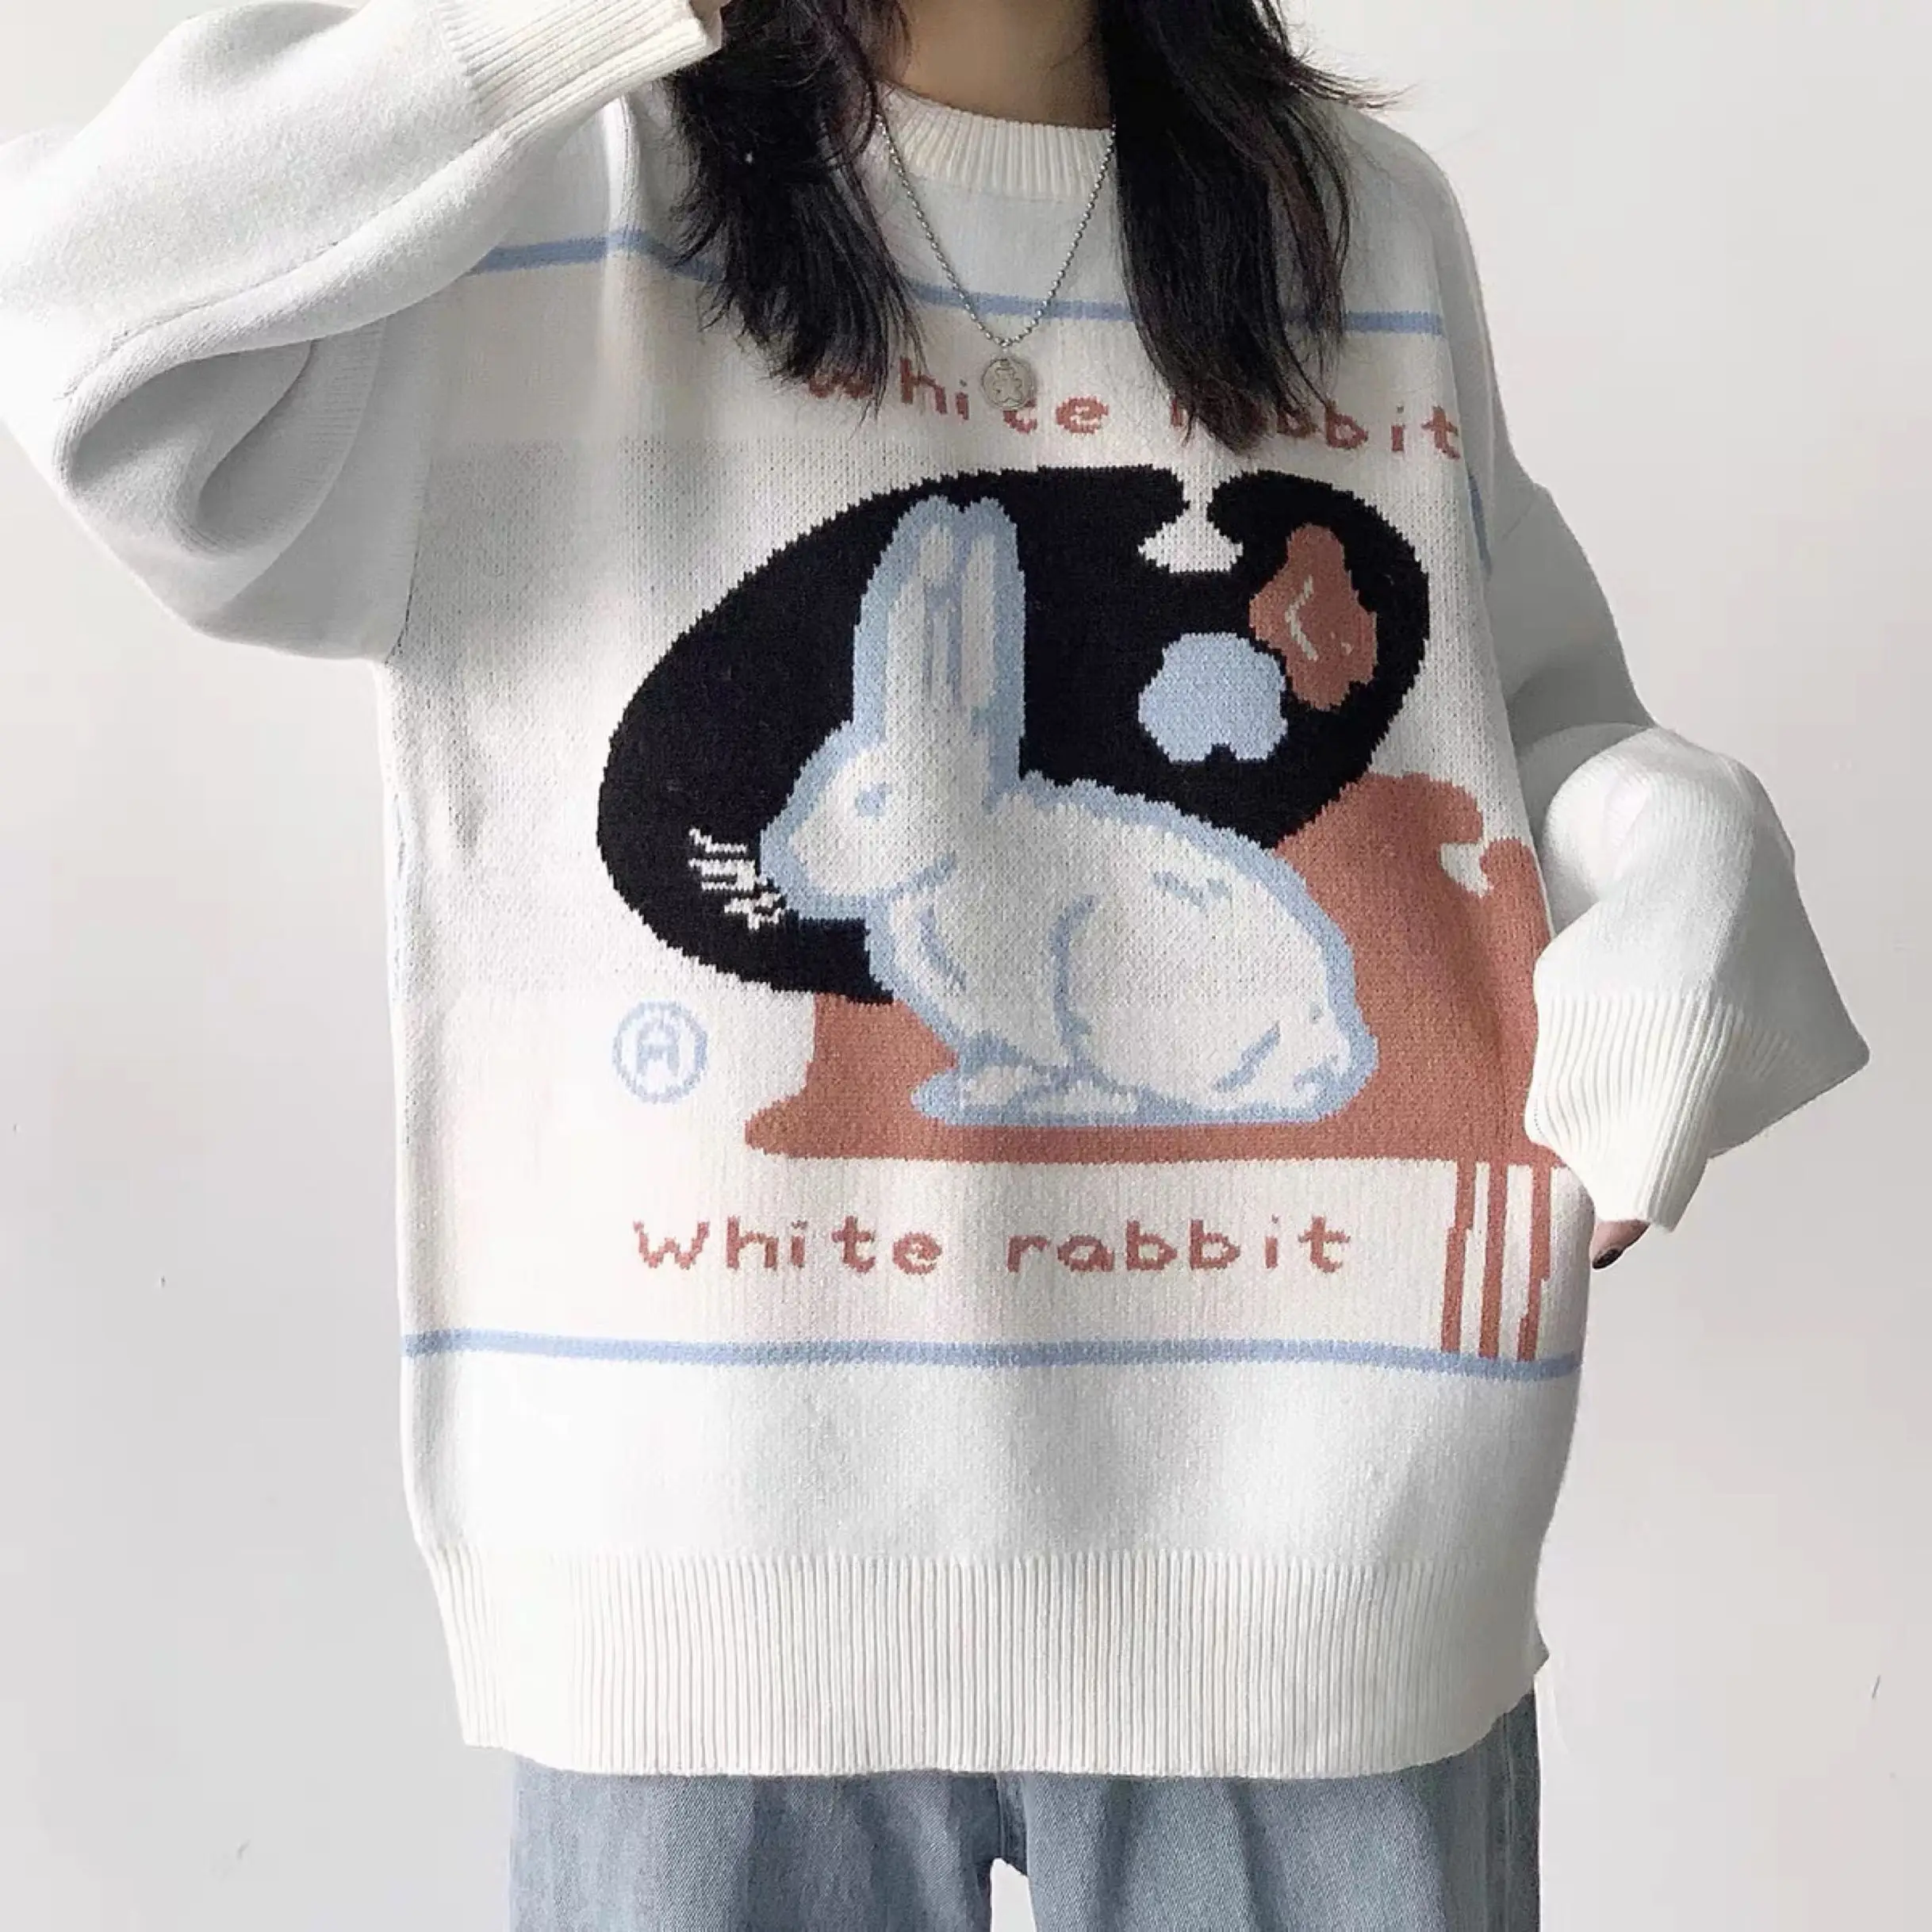 

Rabbit velvet core-spun yarn milk white rabbit sugar jacquard cute childlike round neck pullover warm loose winter sweater tops